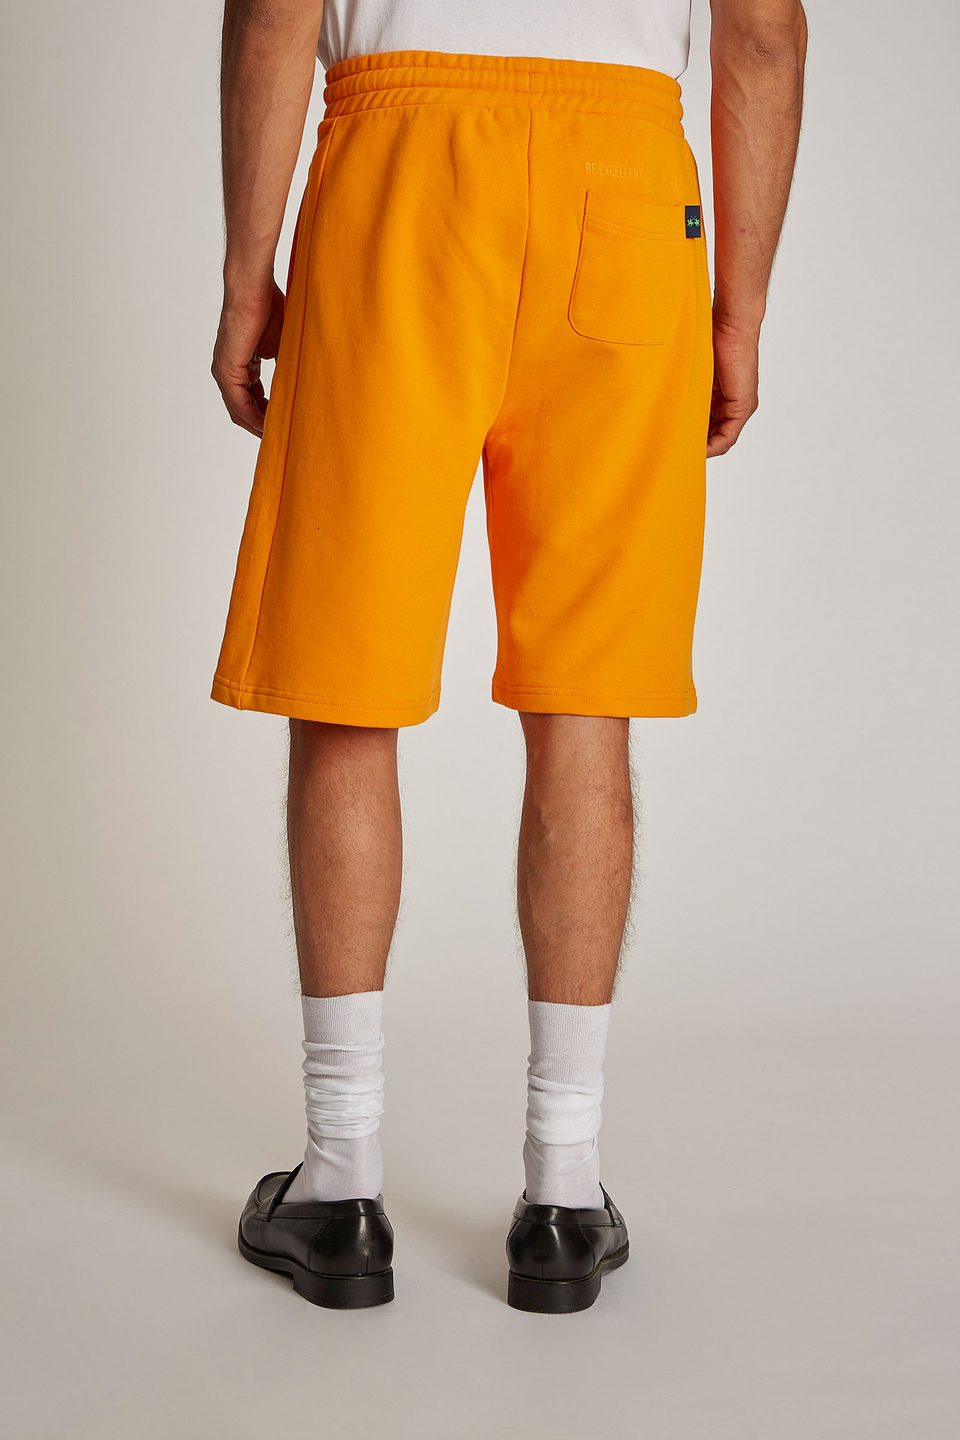 Men's oversized Bermuda shorts in 100% stretch cotton fabric - La Martina - Official Online Shop